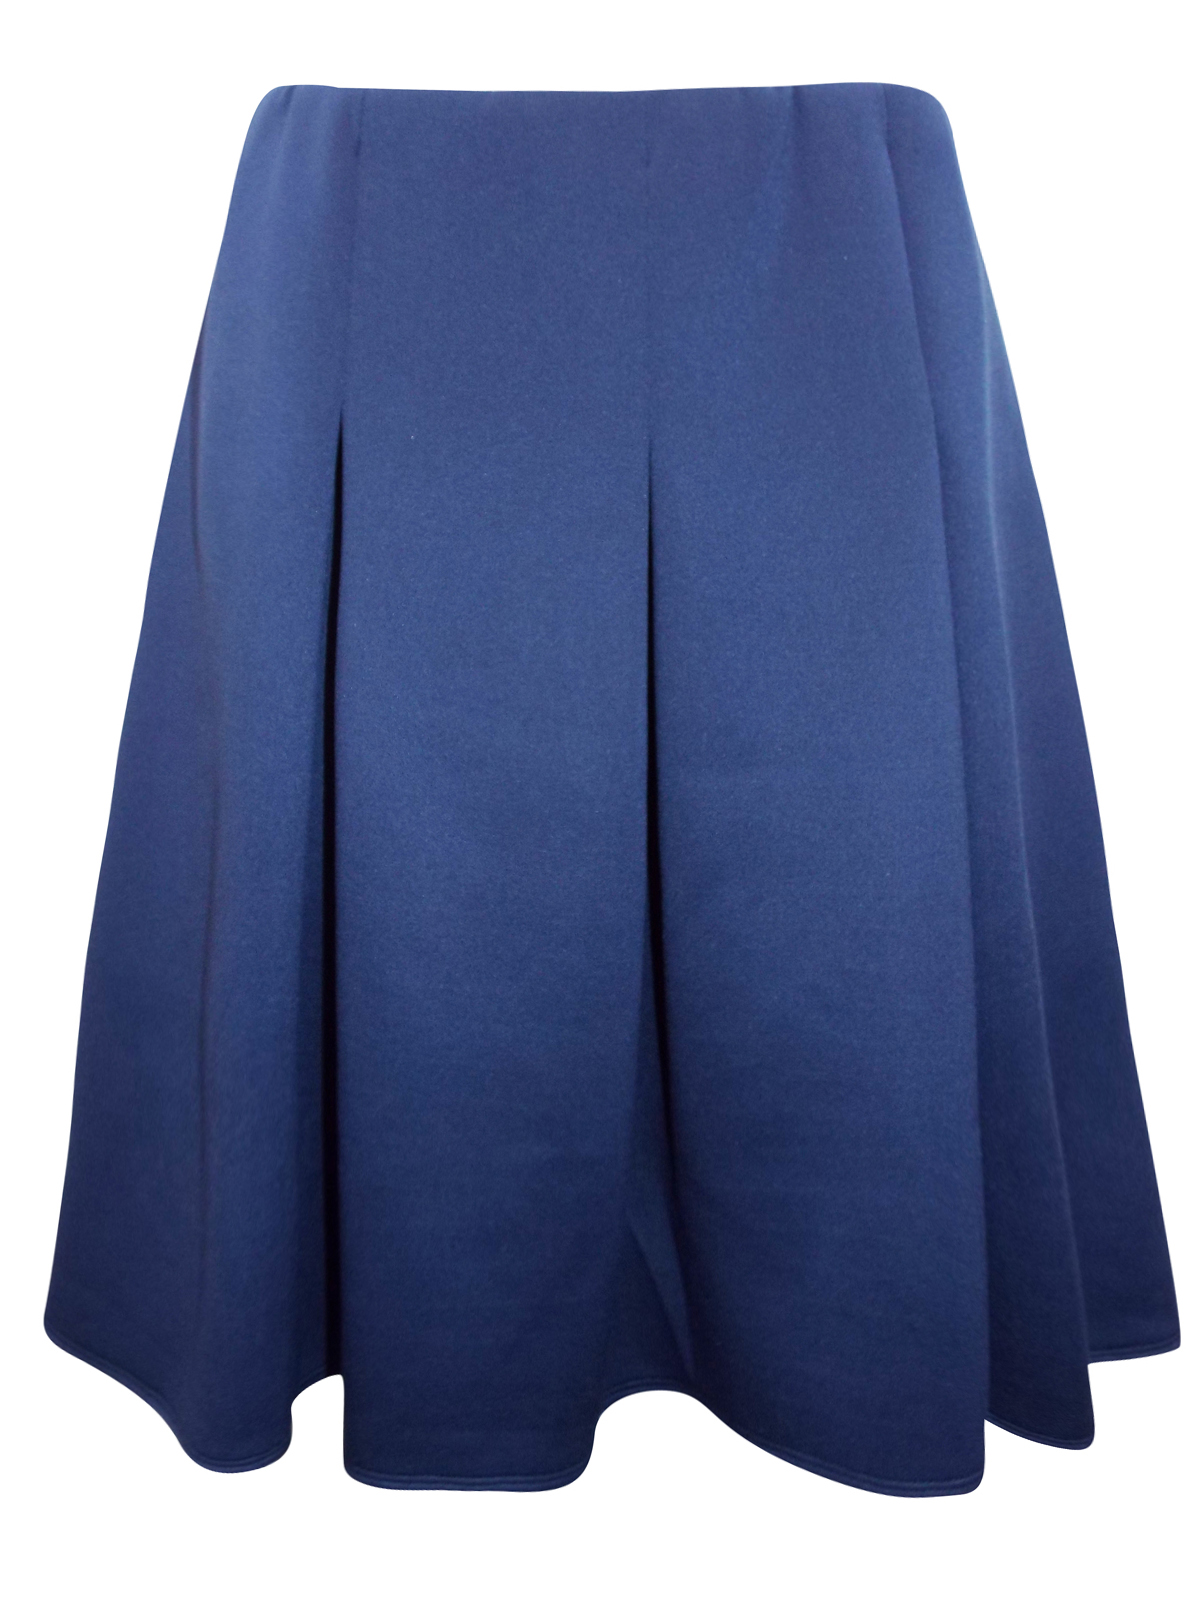 ASSORTED Ladies Mini, Midi & Maxi Skirts - Size 12 to 18